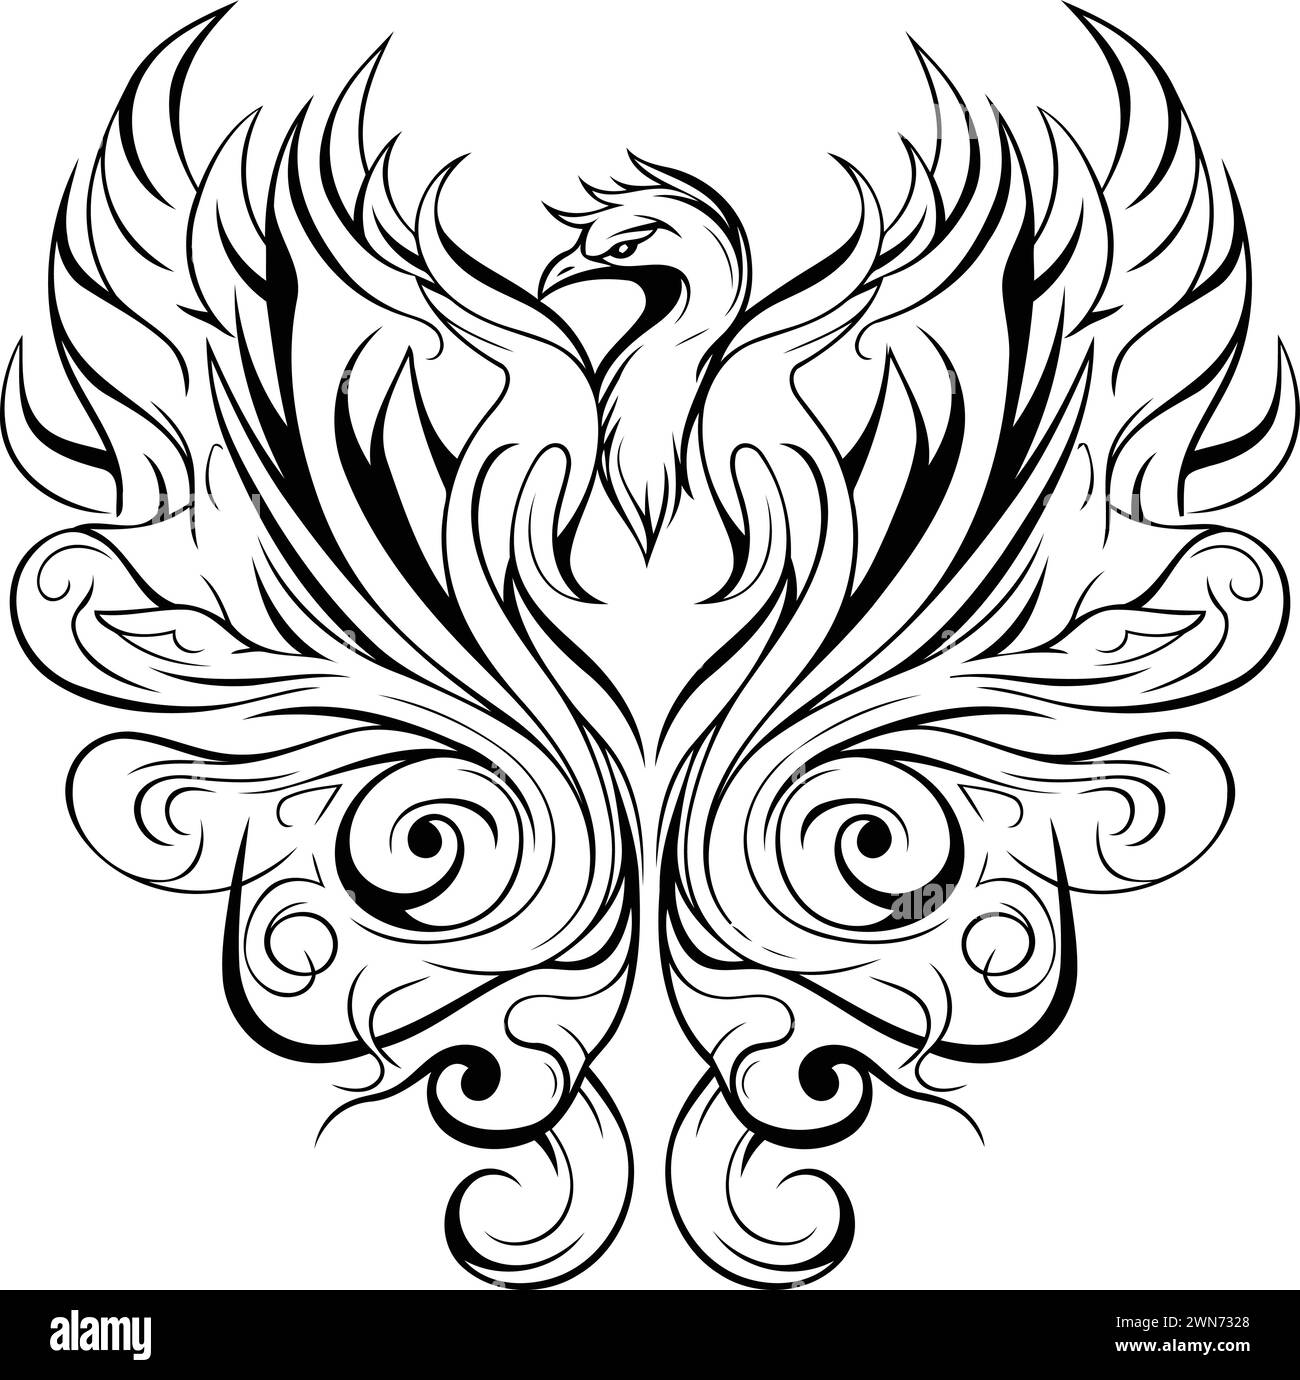 50 Eagle Tattoos: Symbolism, Culture and Design | Art and Design